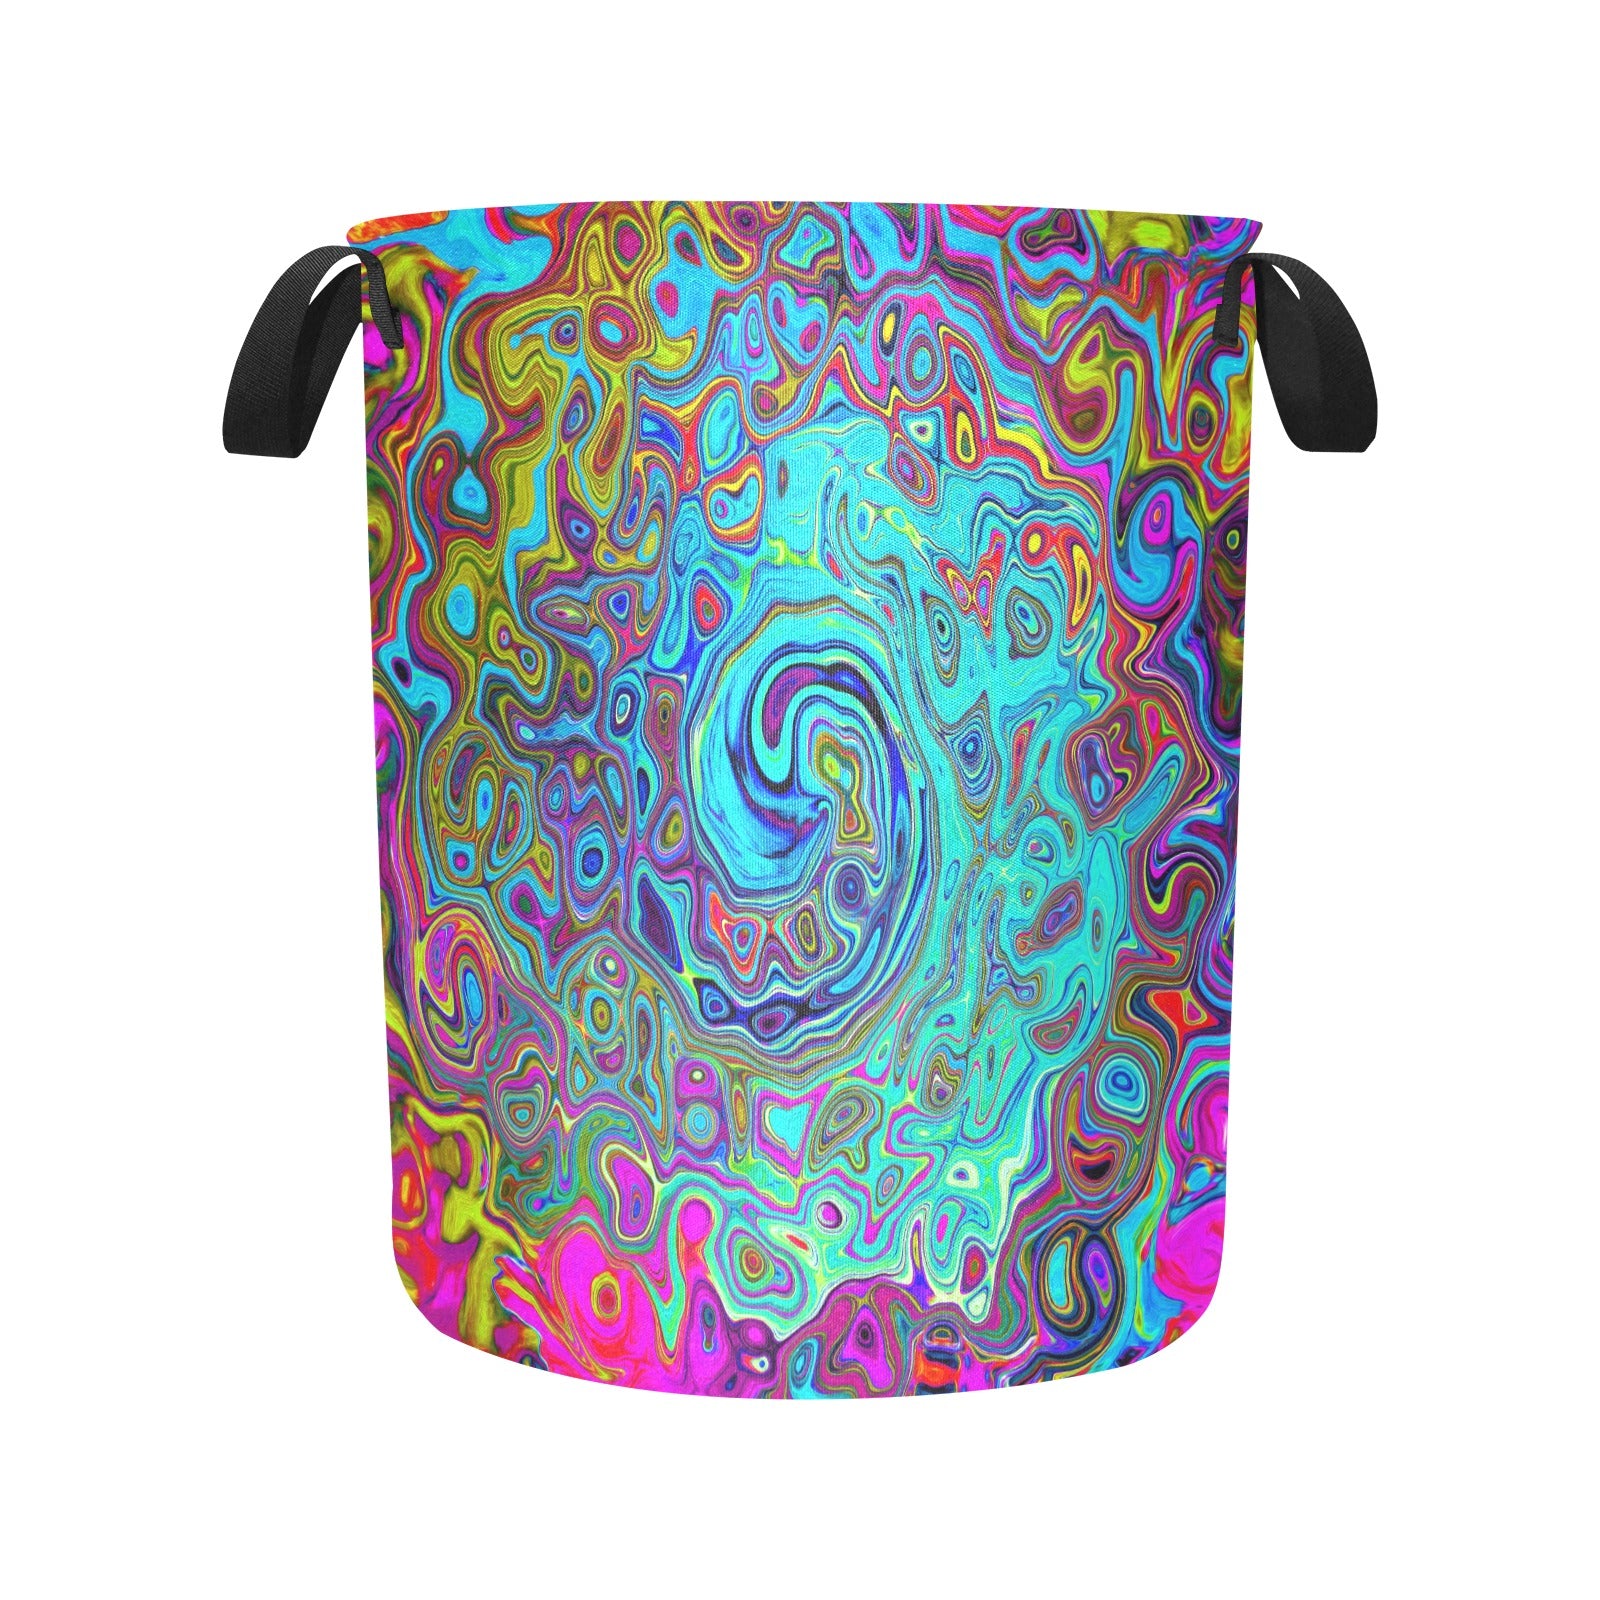 Fabric Laundry Basket with Handles, Trippy Sky Blue Abstract Retro Liquid Swirl